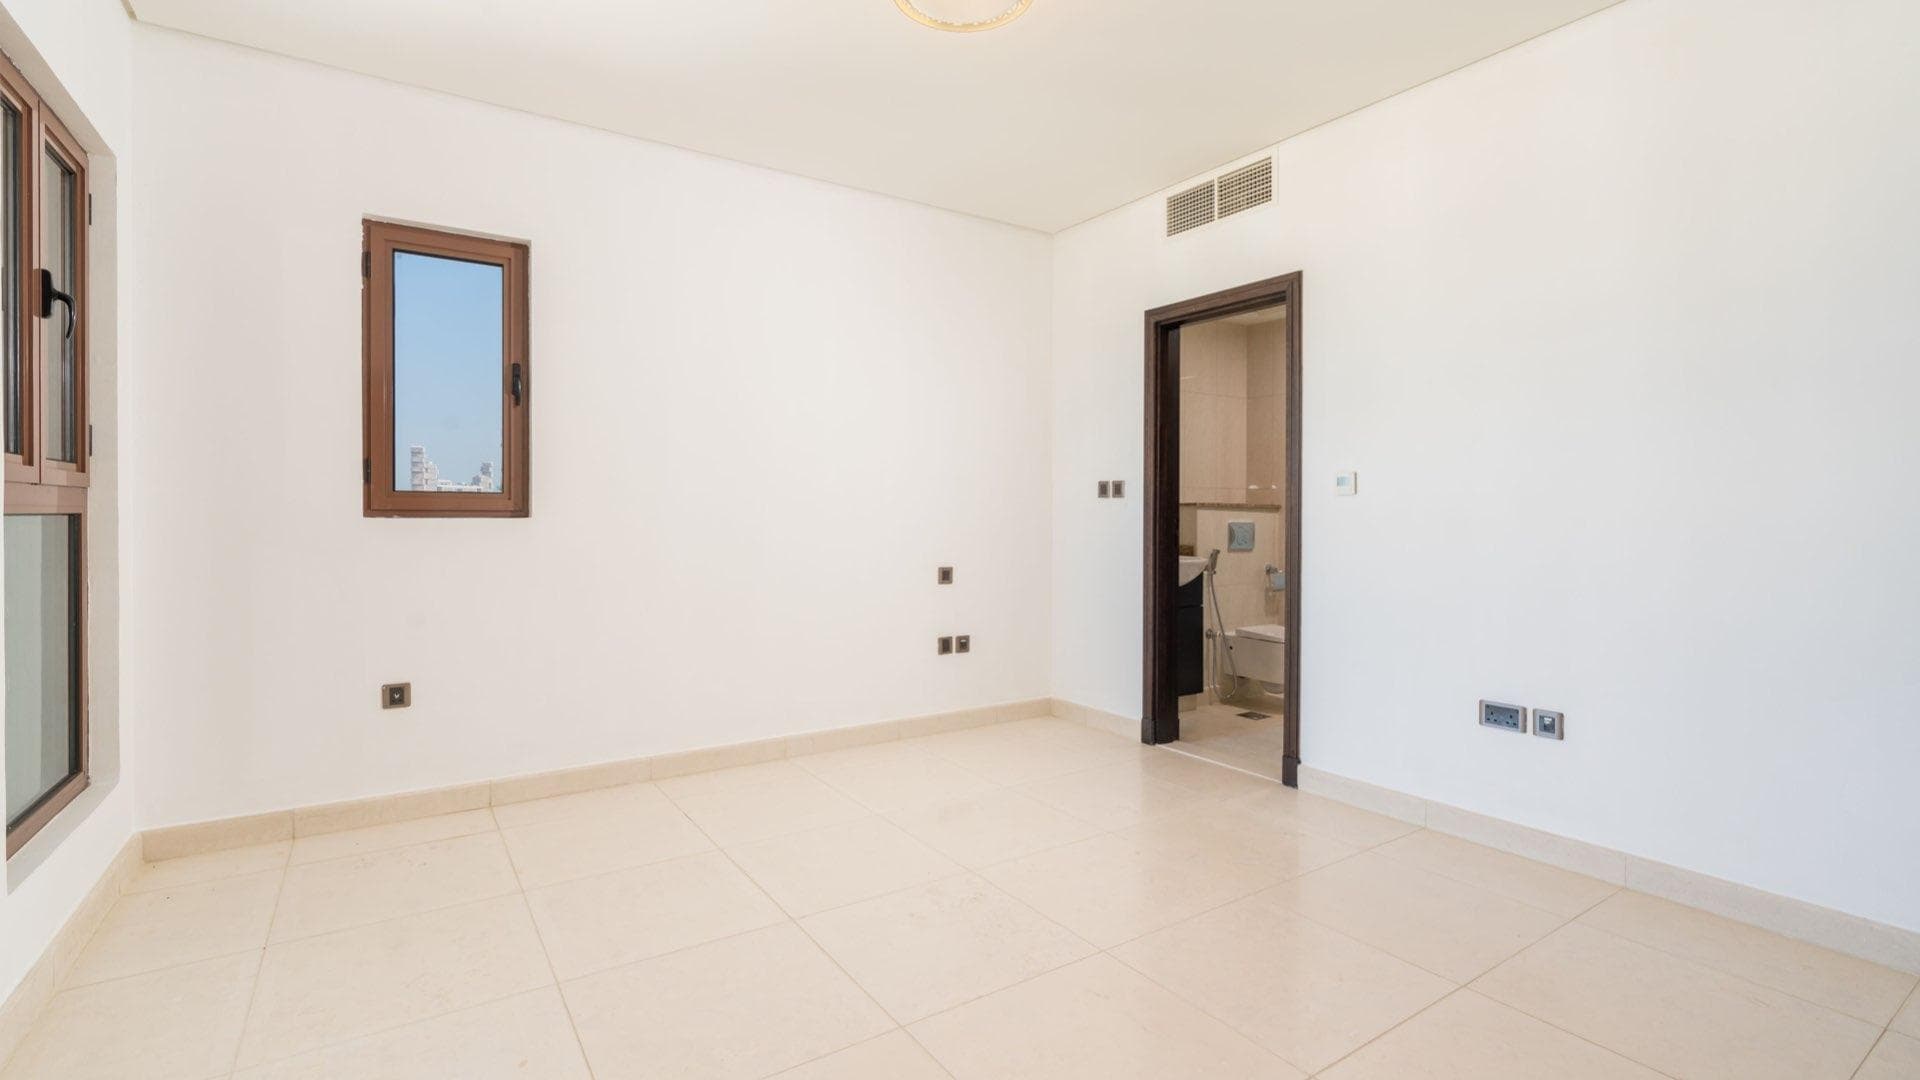 3 Bedroom Apartment For Rent Kingdom Of Sheba Lp20969 1b724f1e2e725200.jpg